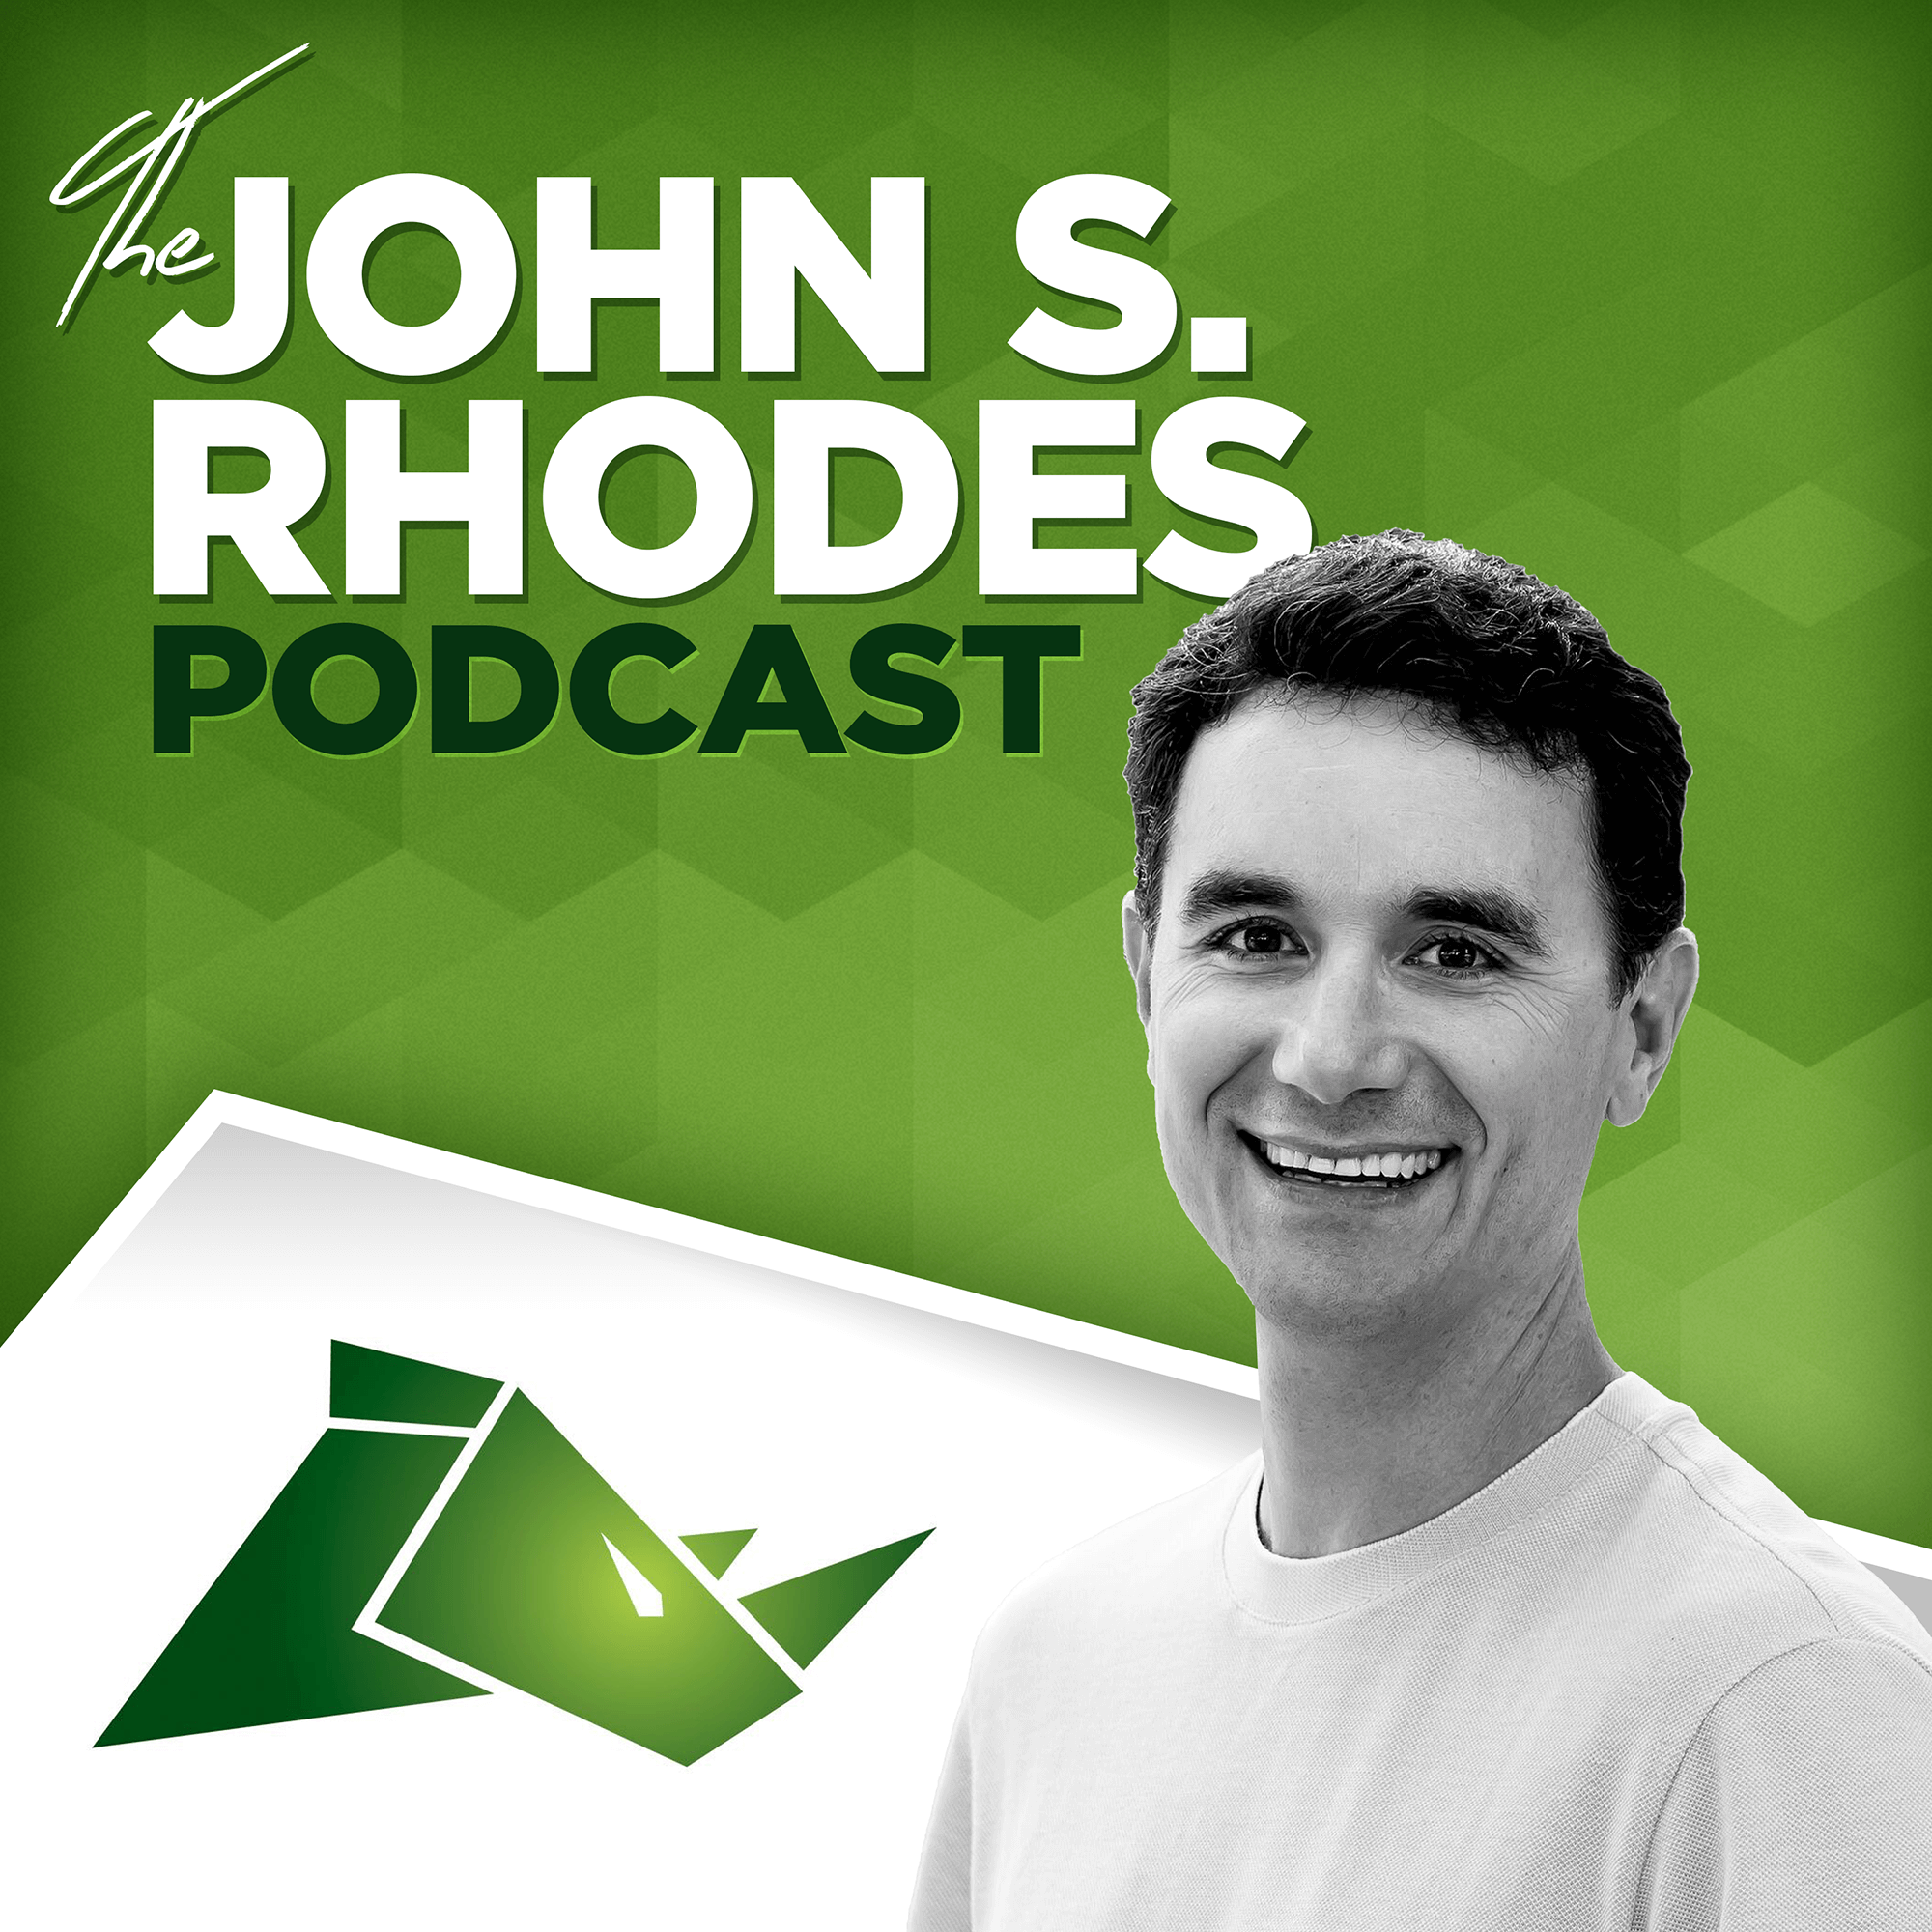 The John S Rhodes List Building Podcast